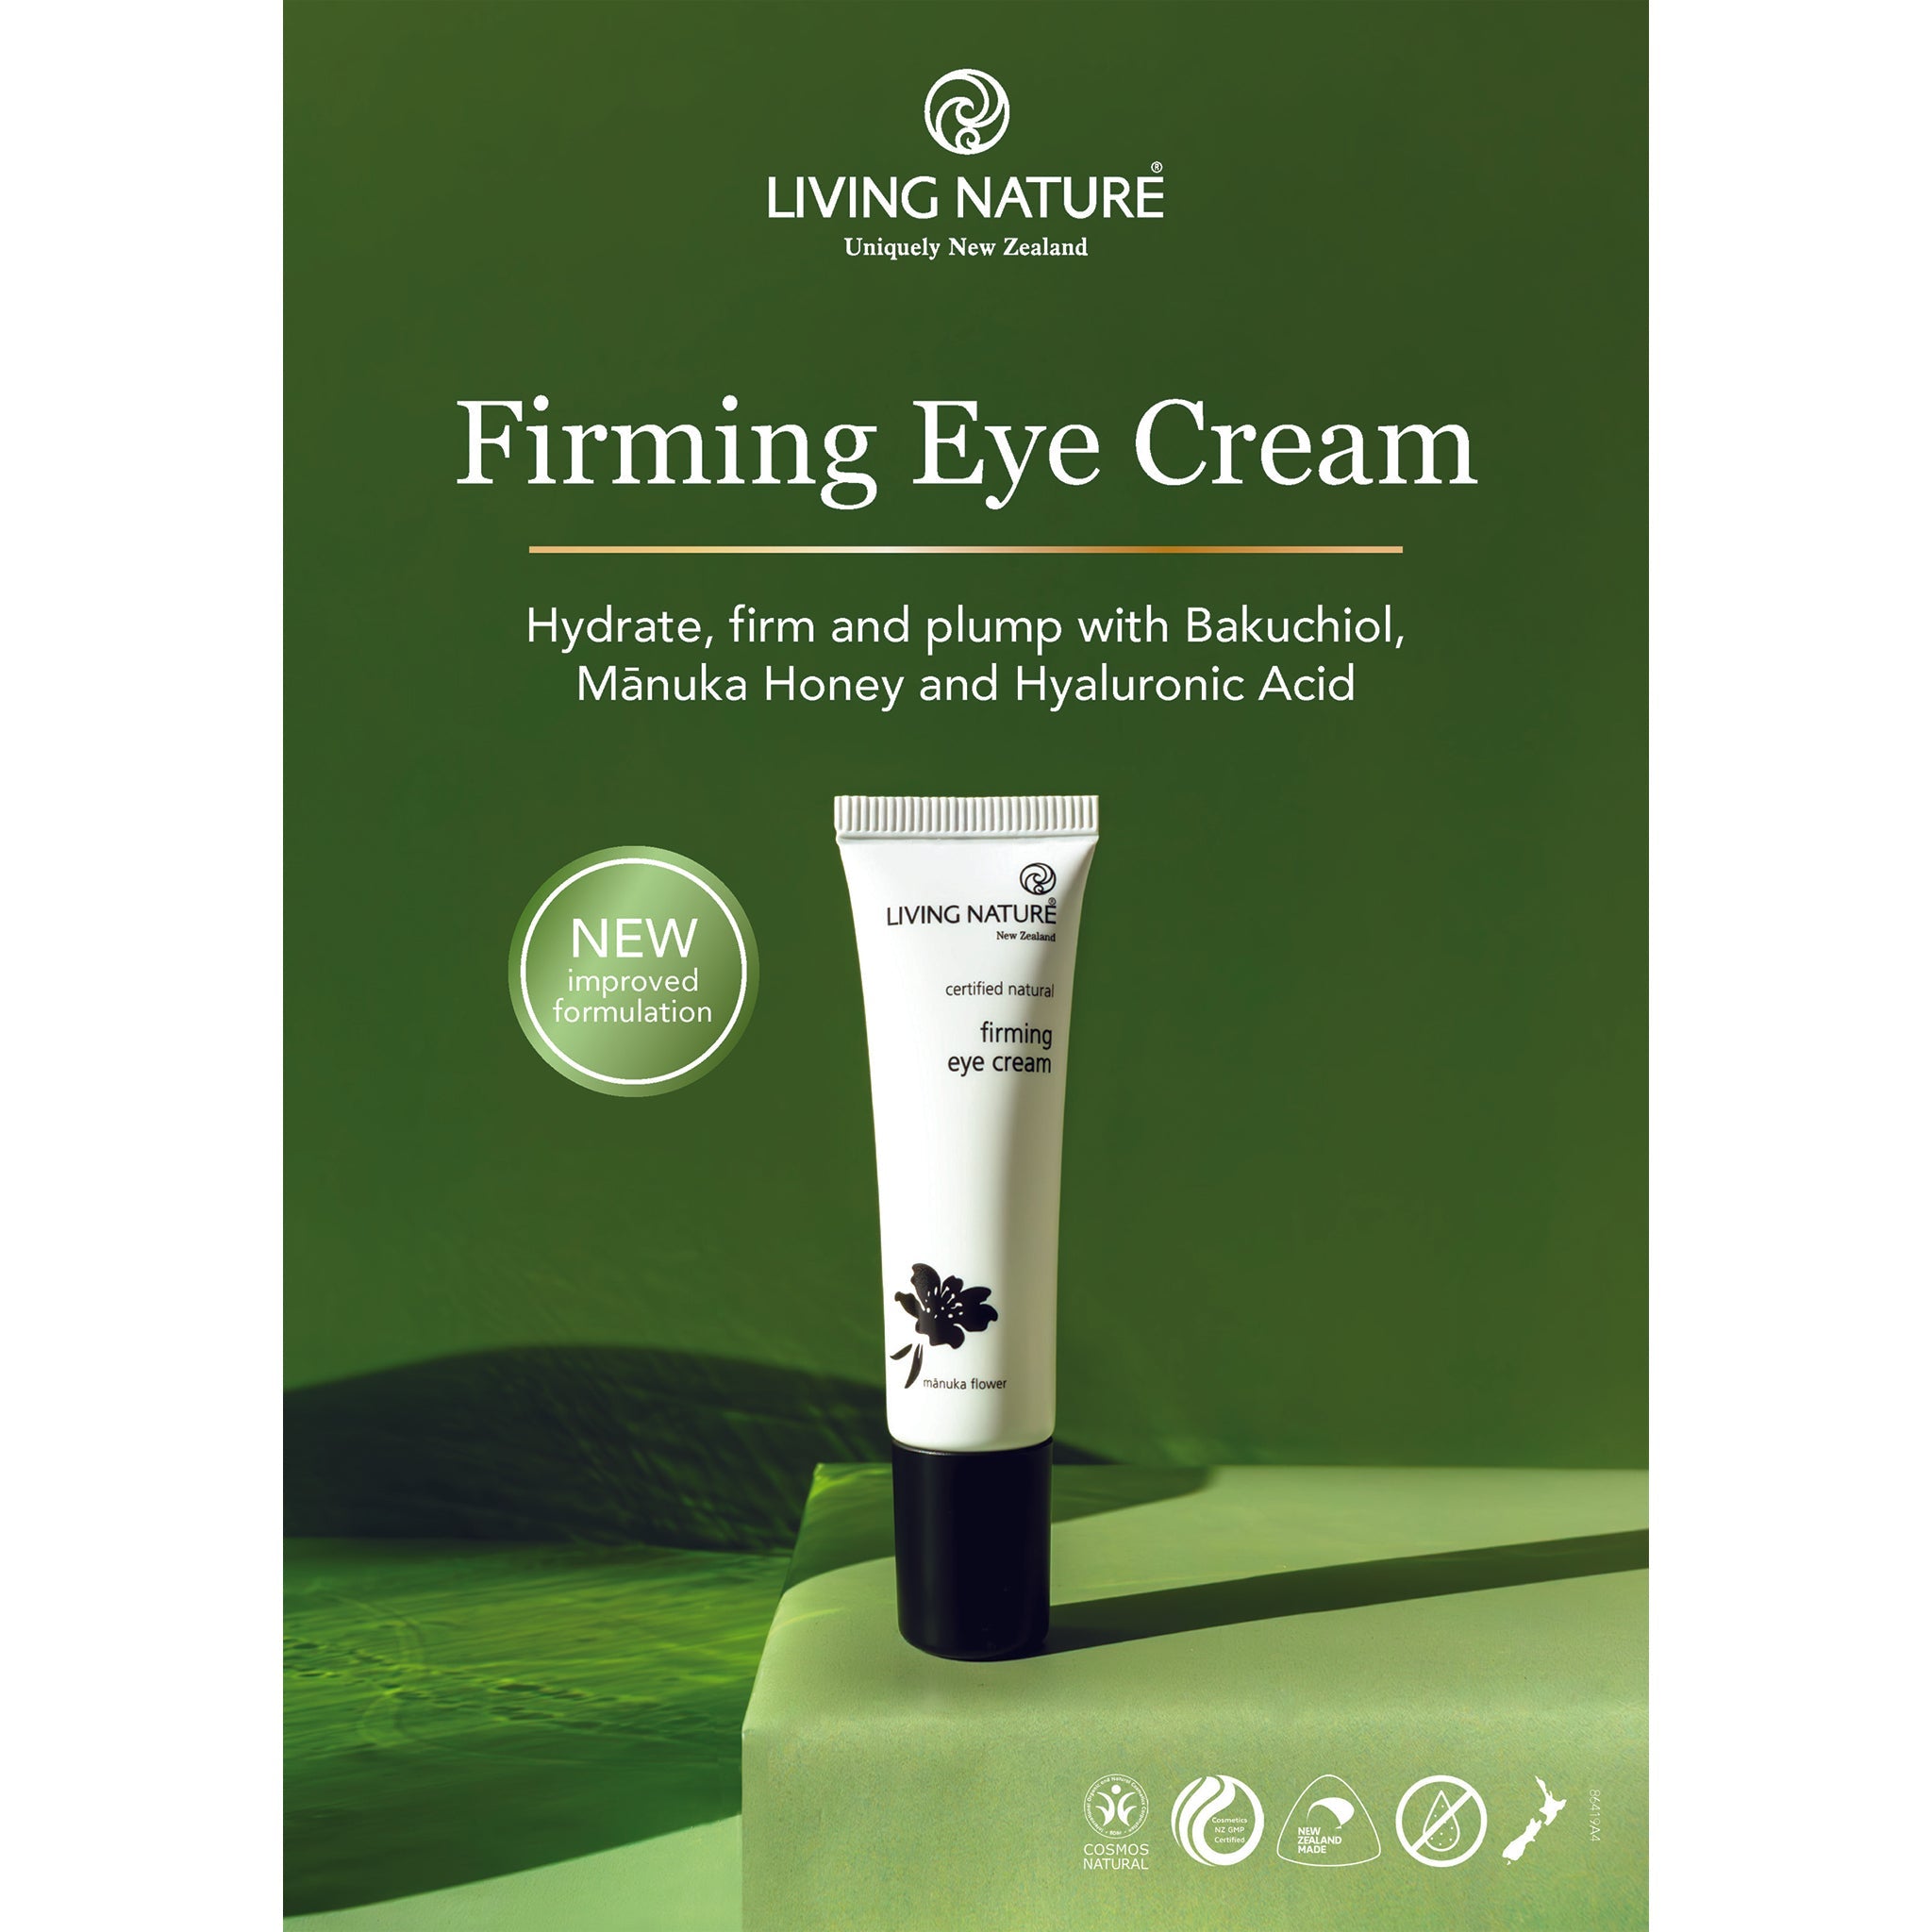 Firming Eye Cream - mypure.co.uk